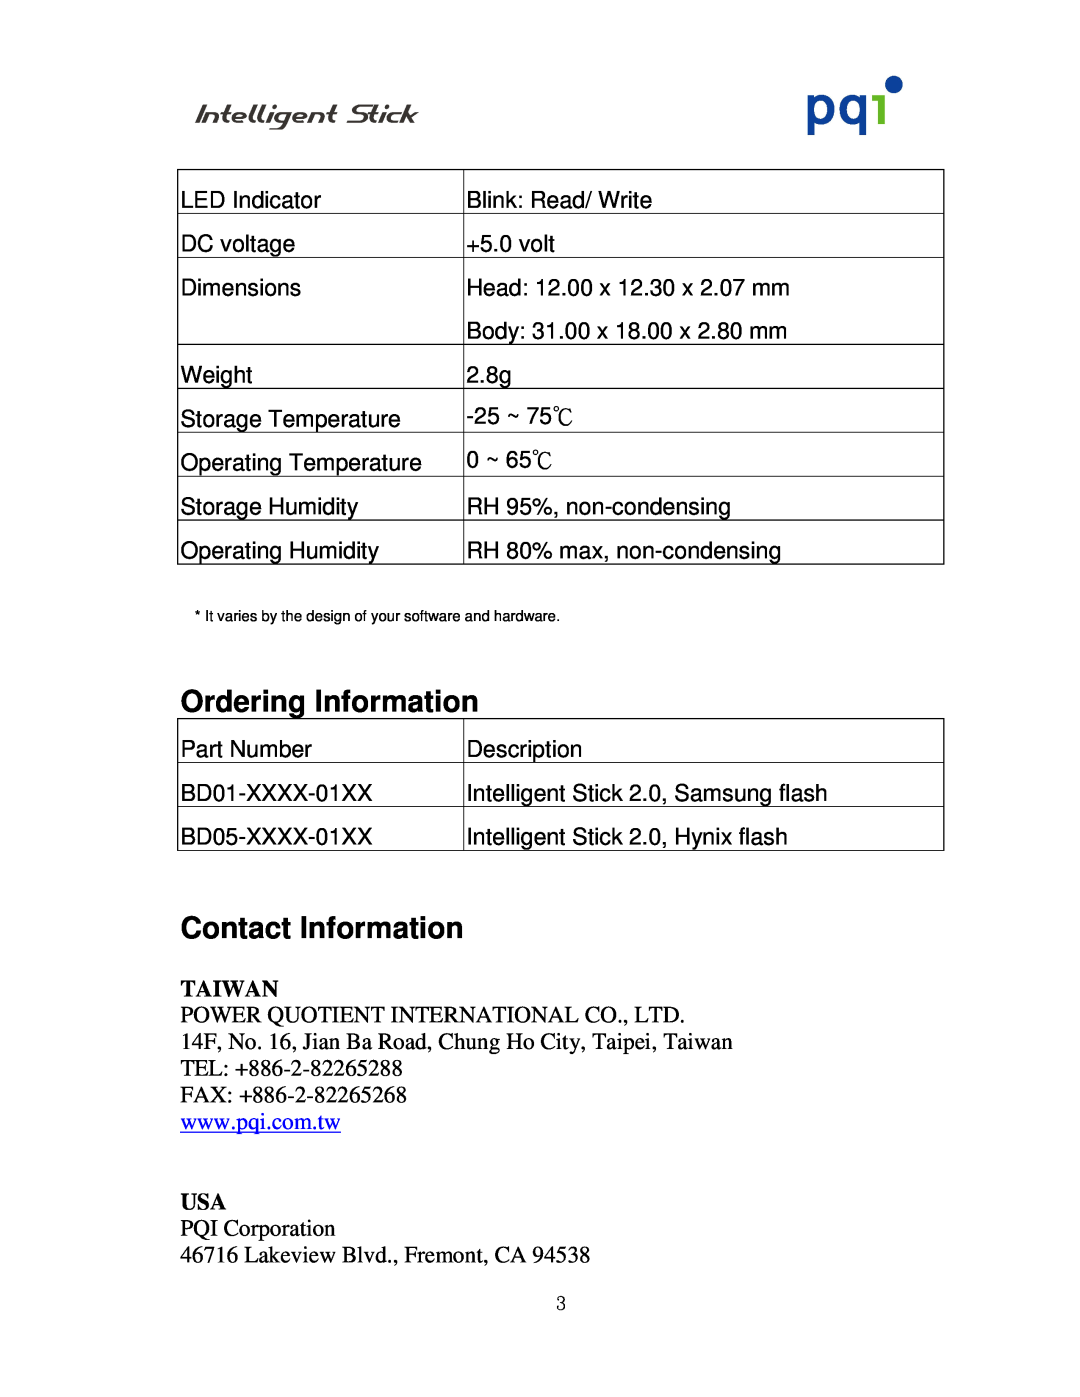 PQI I-Stick 2.0 manual Ordering Information, Contact Information, Taiwan 